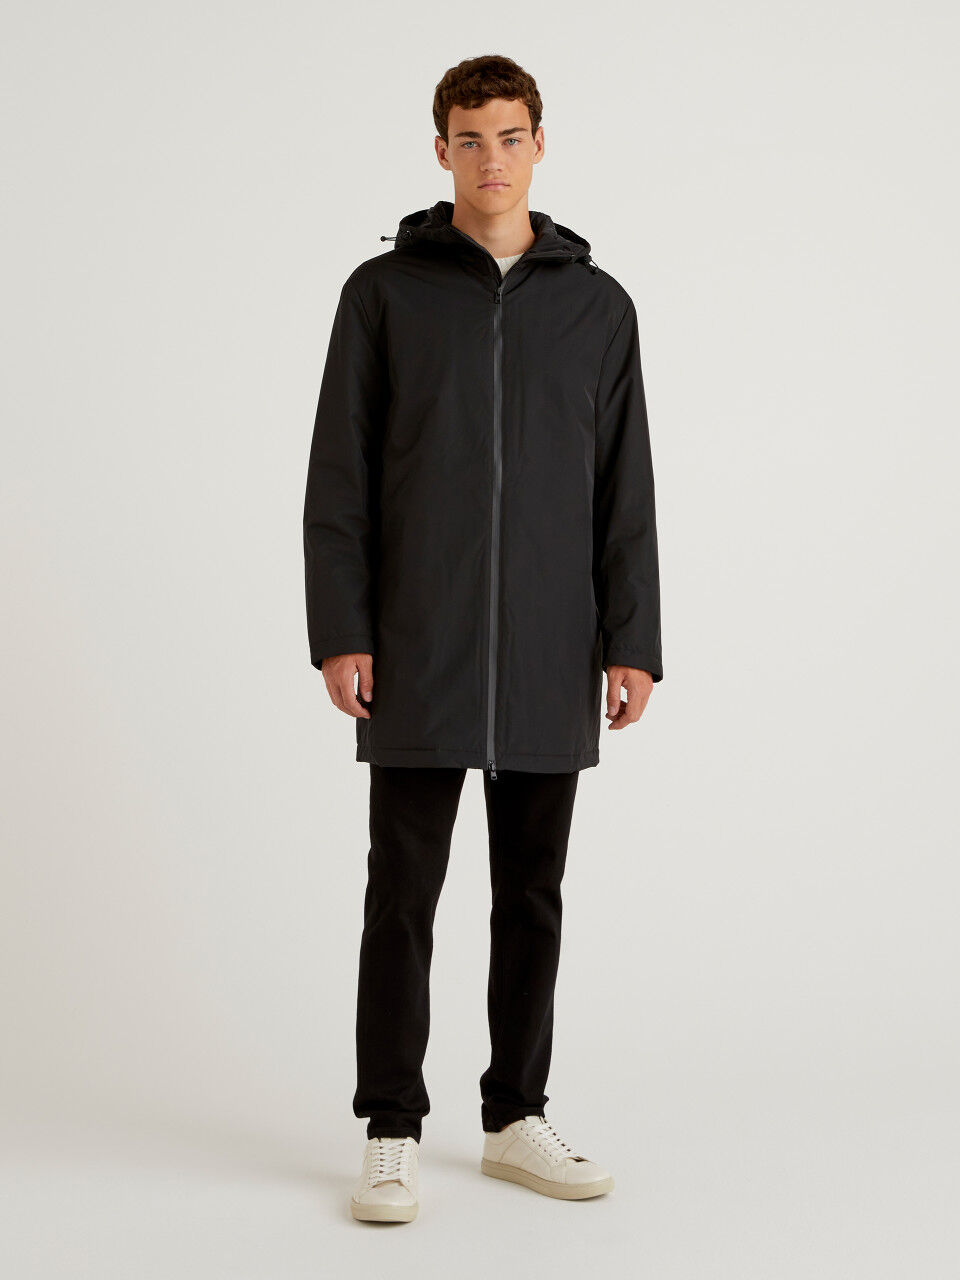 Beshion Men's Autumn&Winter Solid Color Long Sleeved Windbreaker Hooded Coats & Jackets 